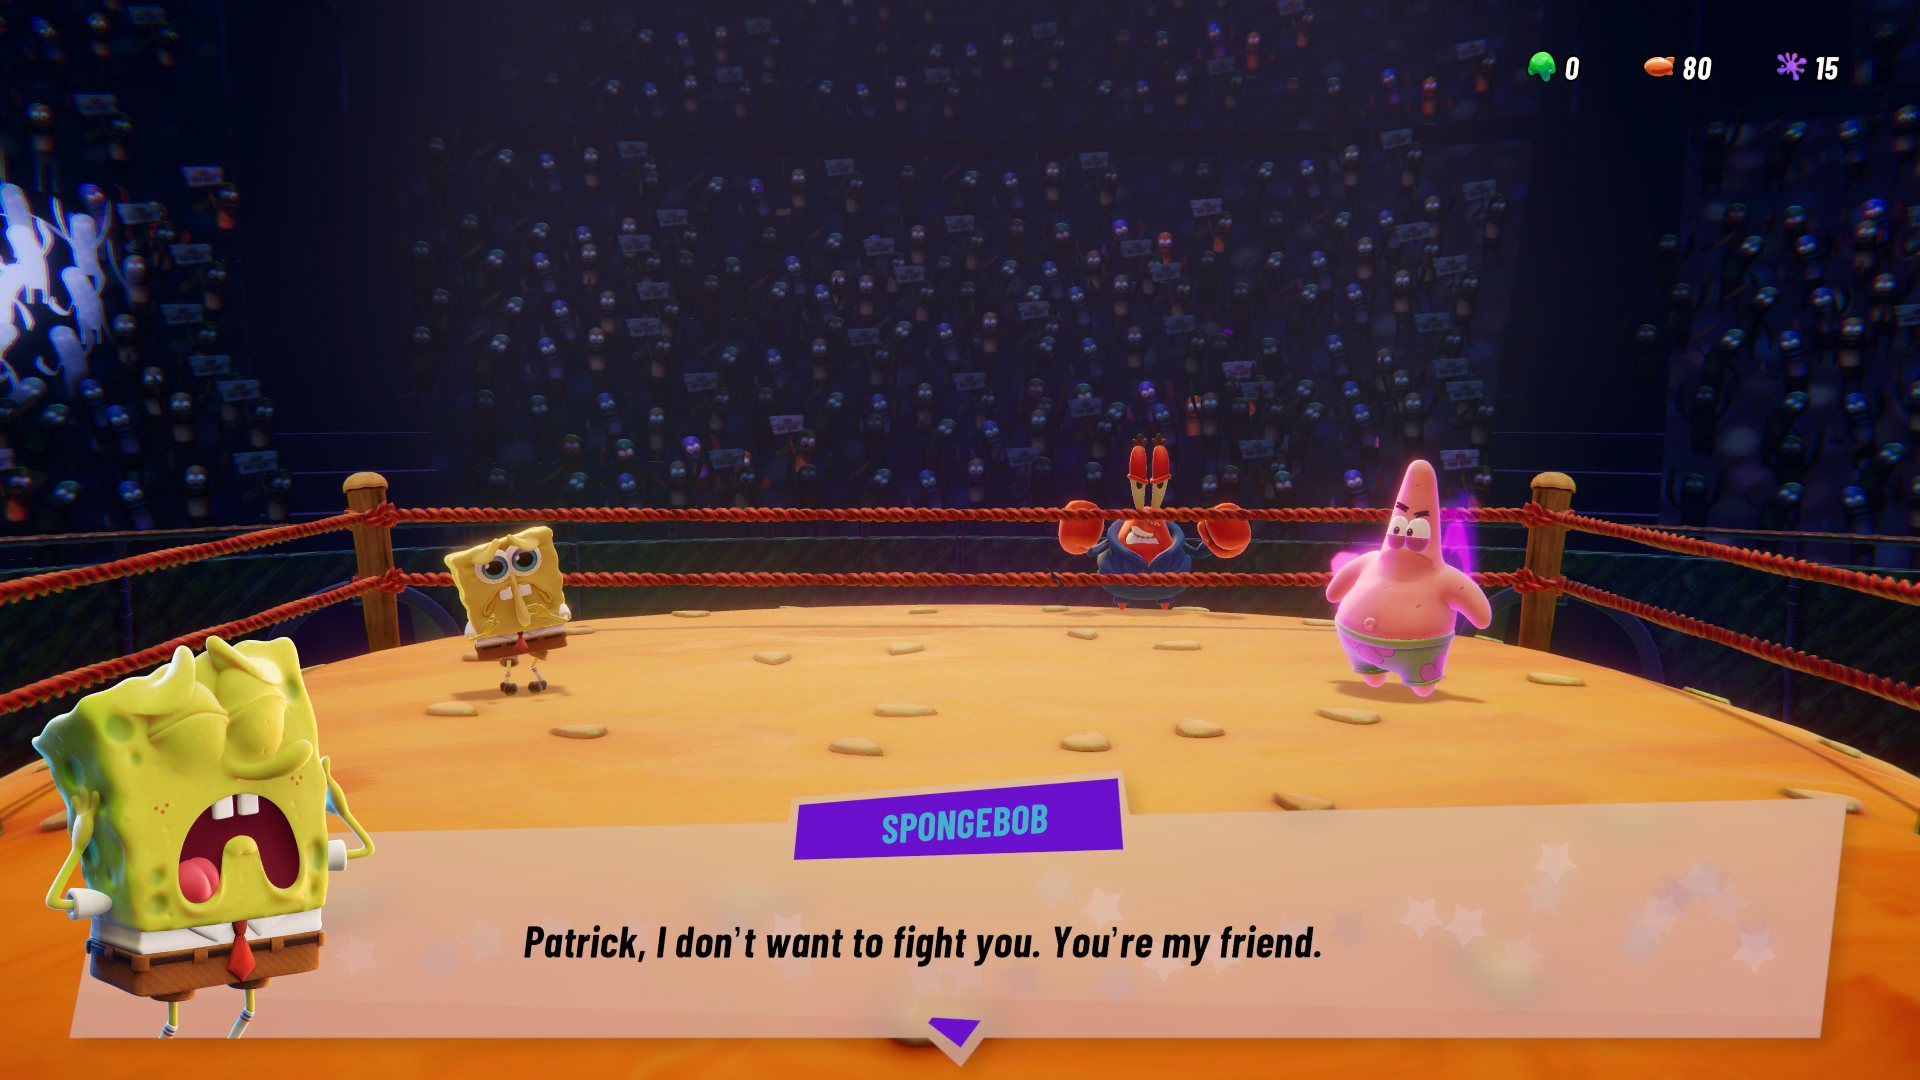 Spongebob talking to Patrick in Nickelodeon All-Star Brawl 2